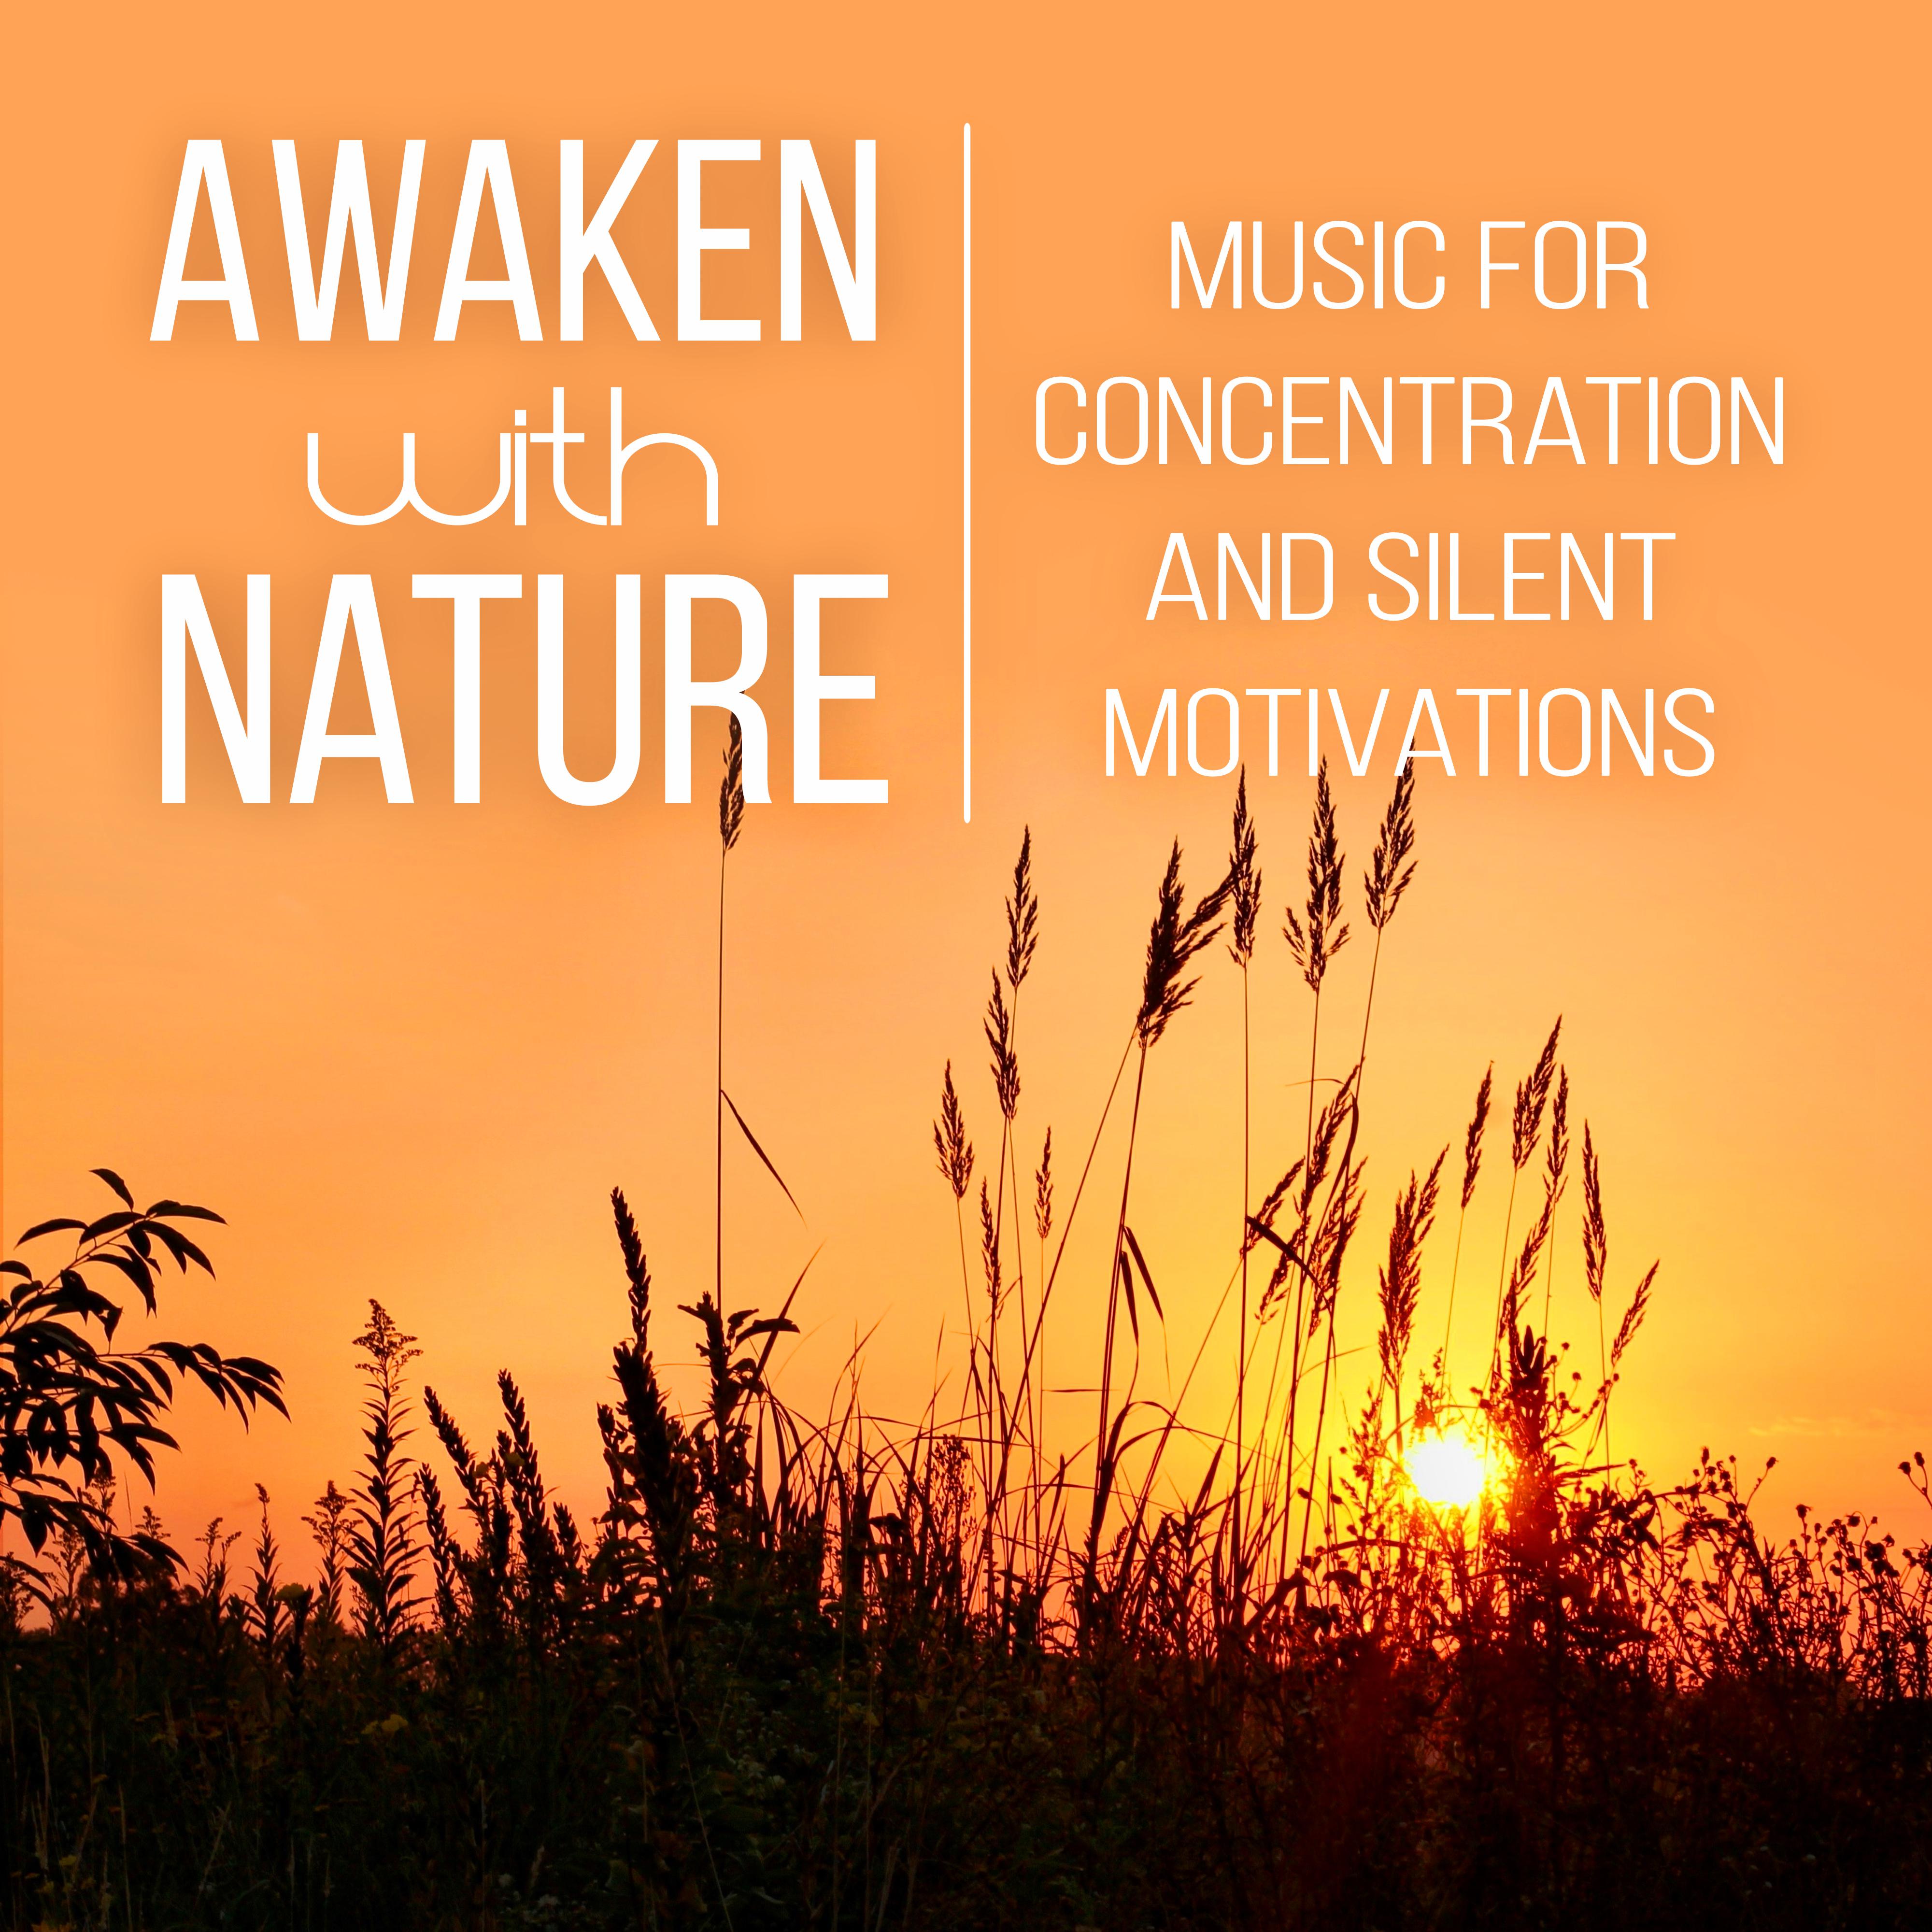 Awaken with Nature